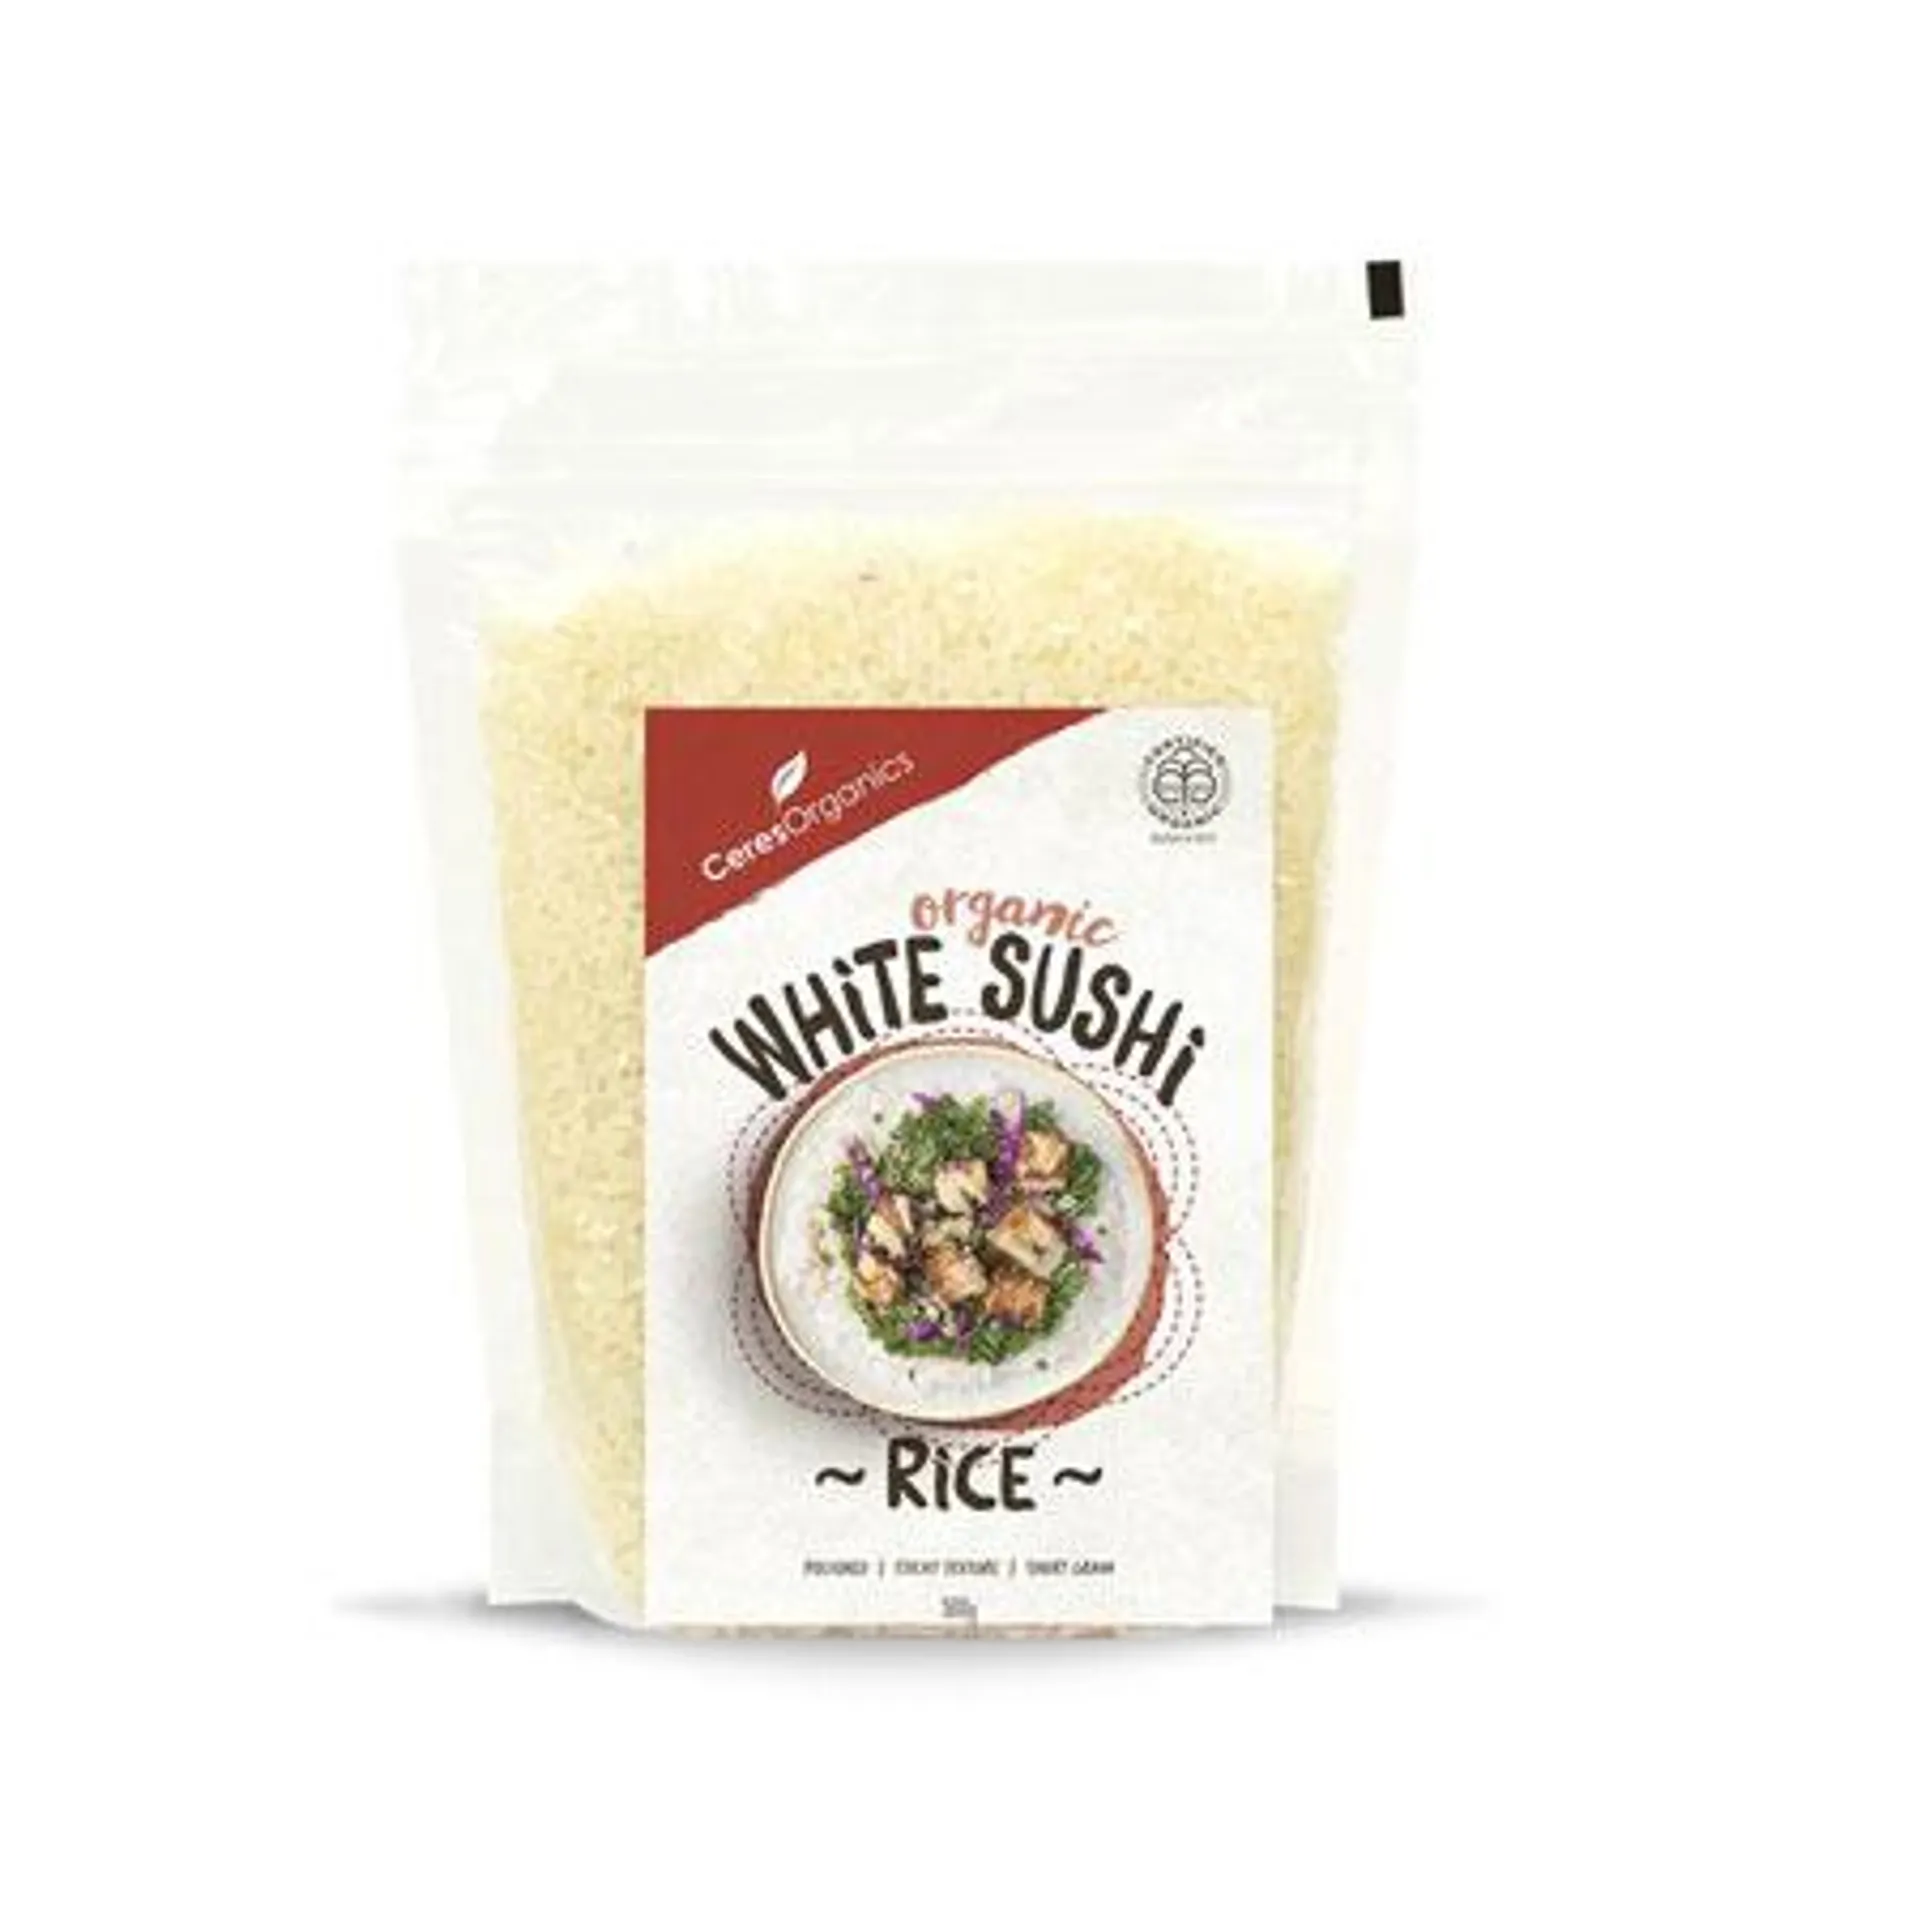 Ceres Organics Rice White Sushi